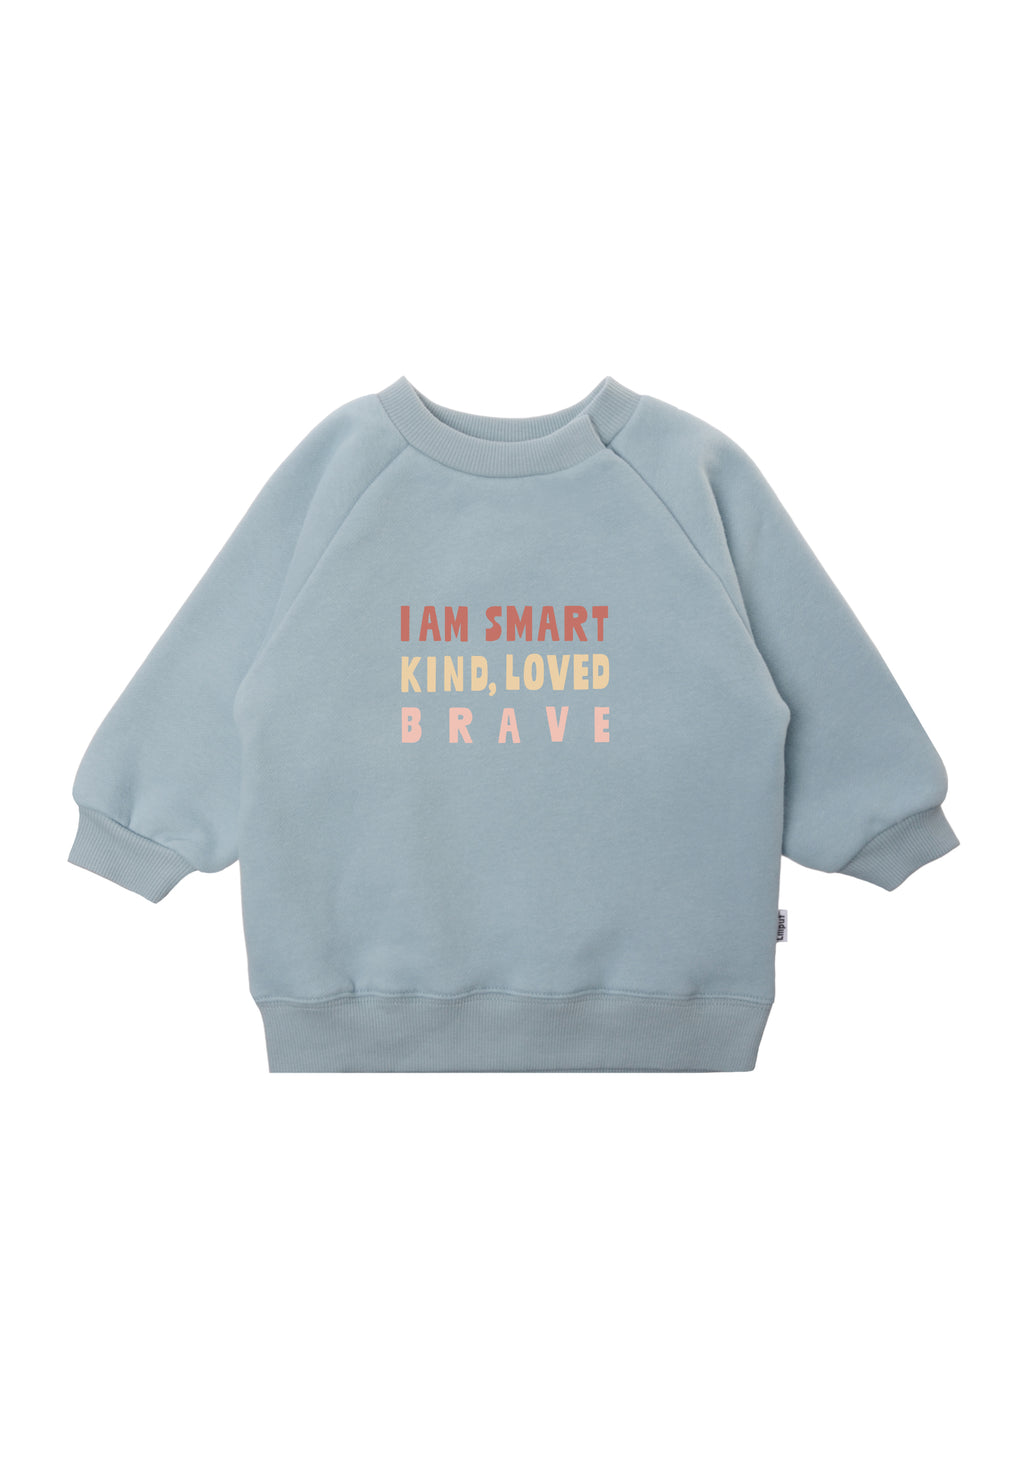 Sweatshirt in hellblau mit Wording "iam smart kind, loved, brave".